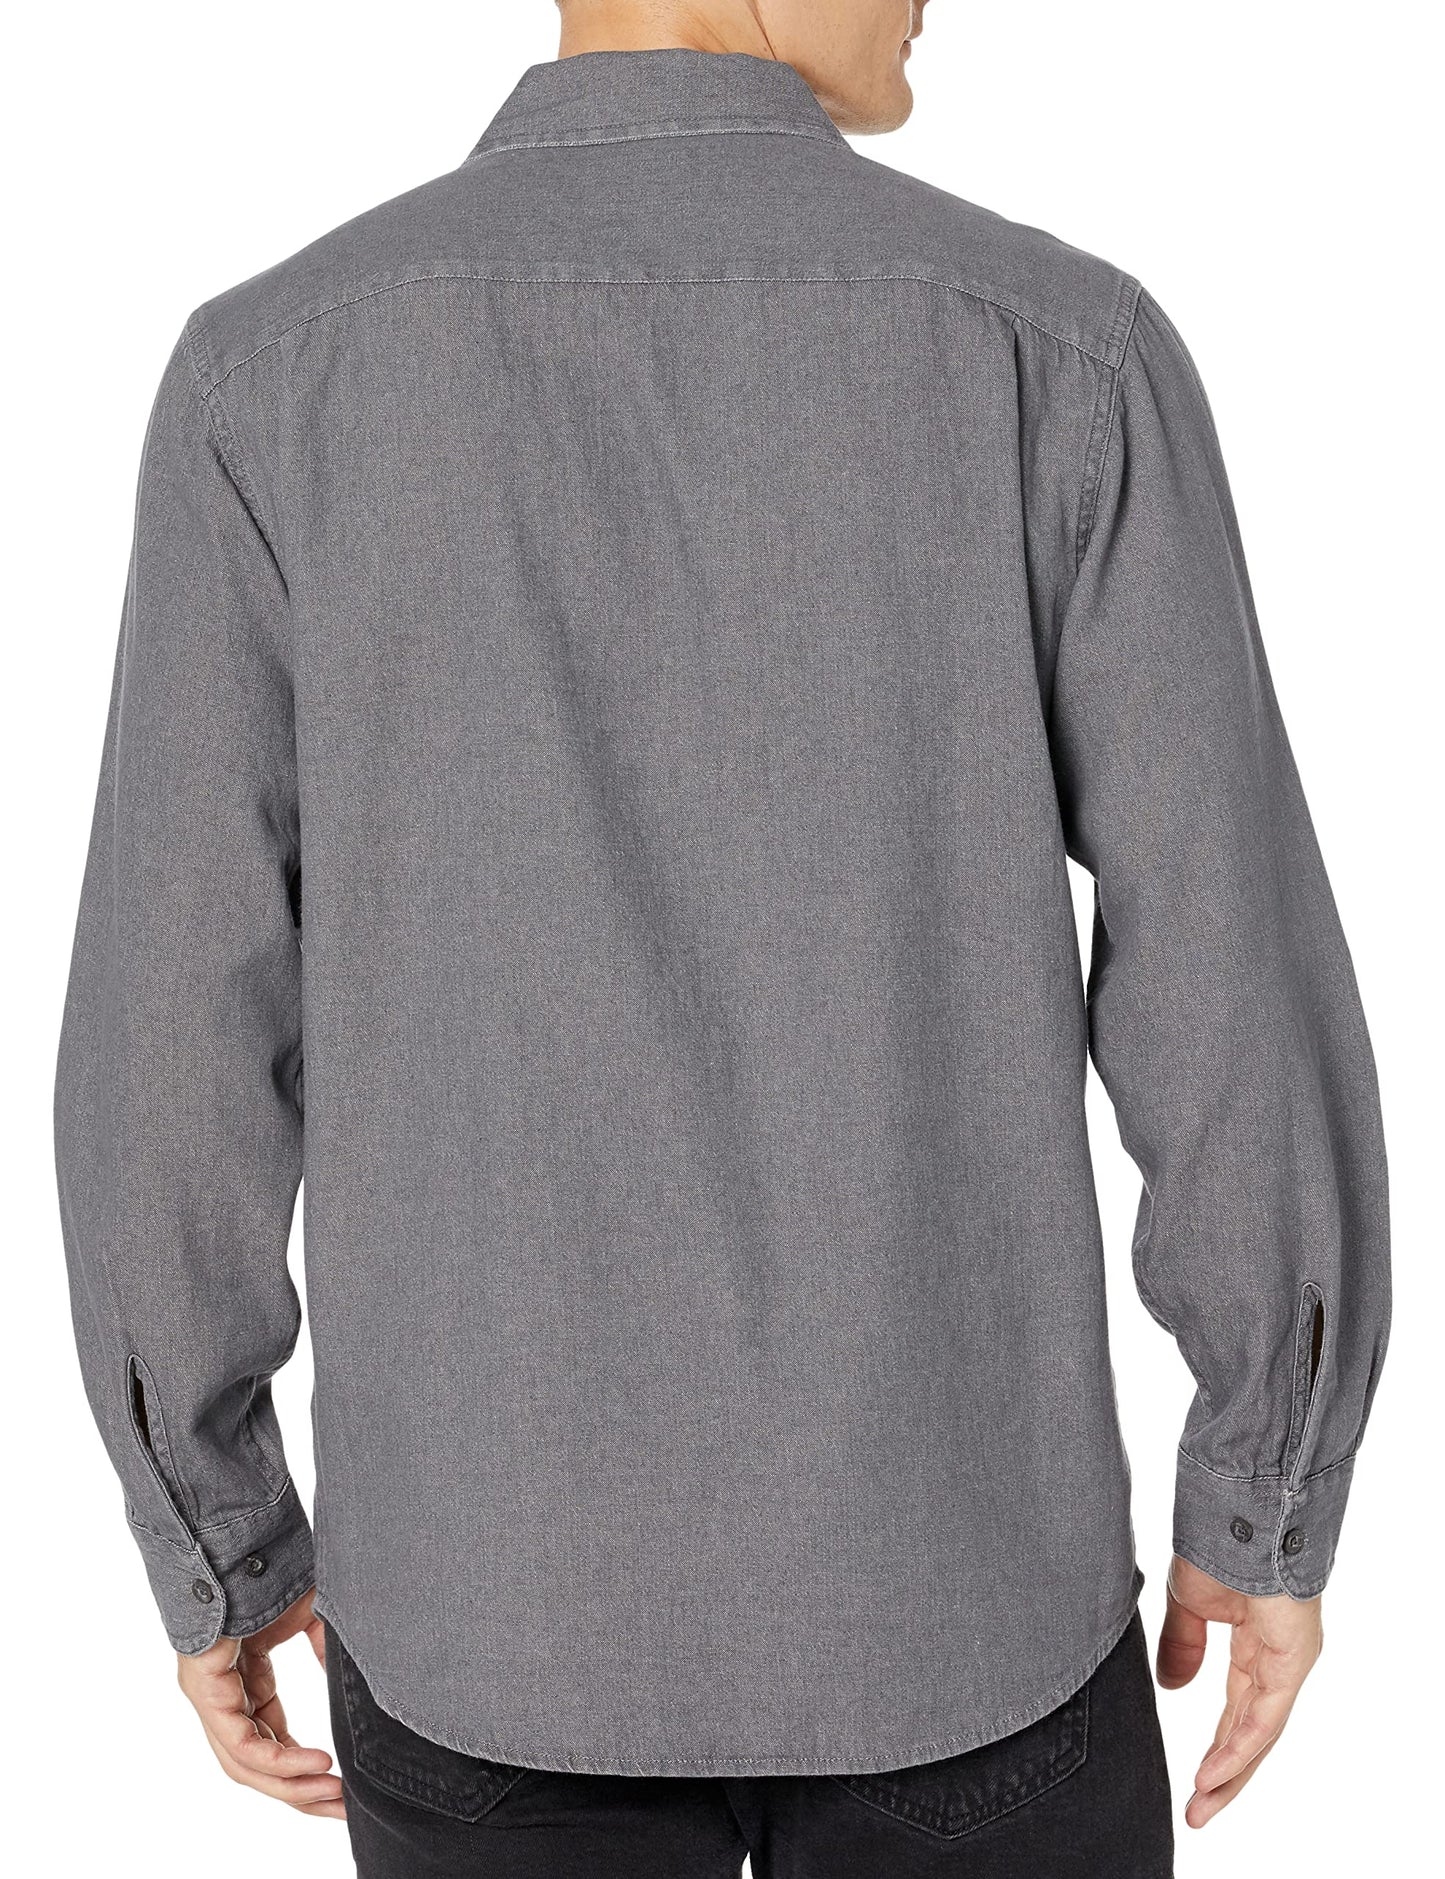 Wrangler Authentics Men's Long Sleeve Classic Woven Shirt, Grey, Small